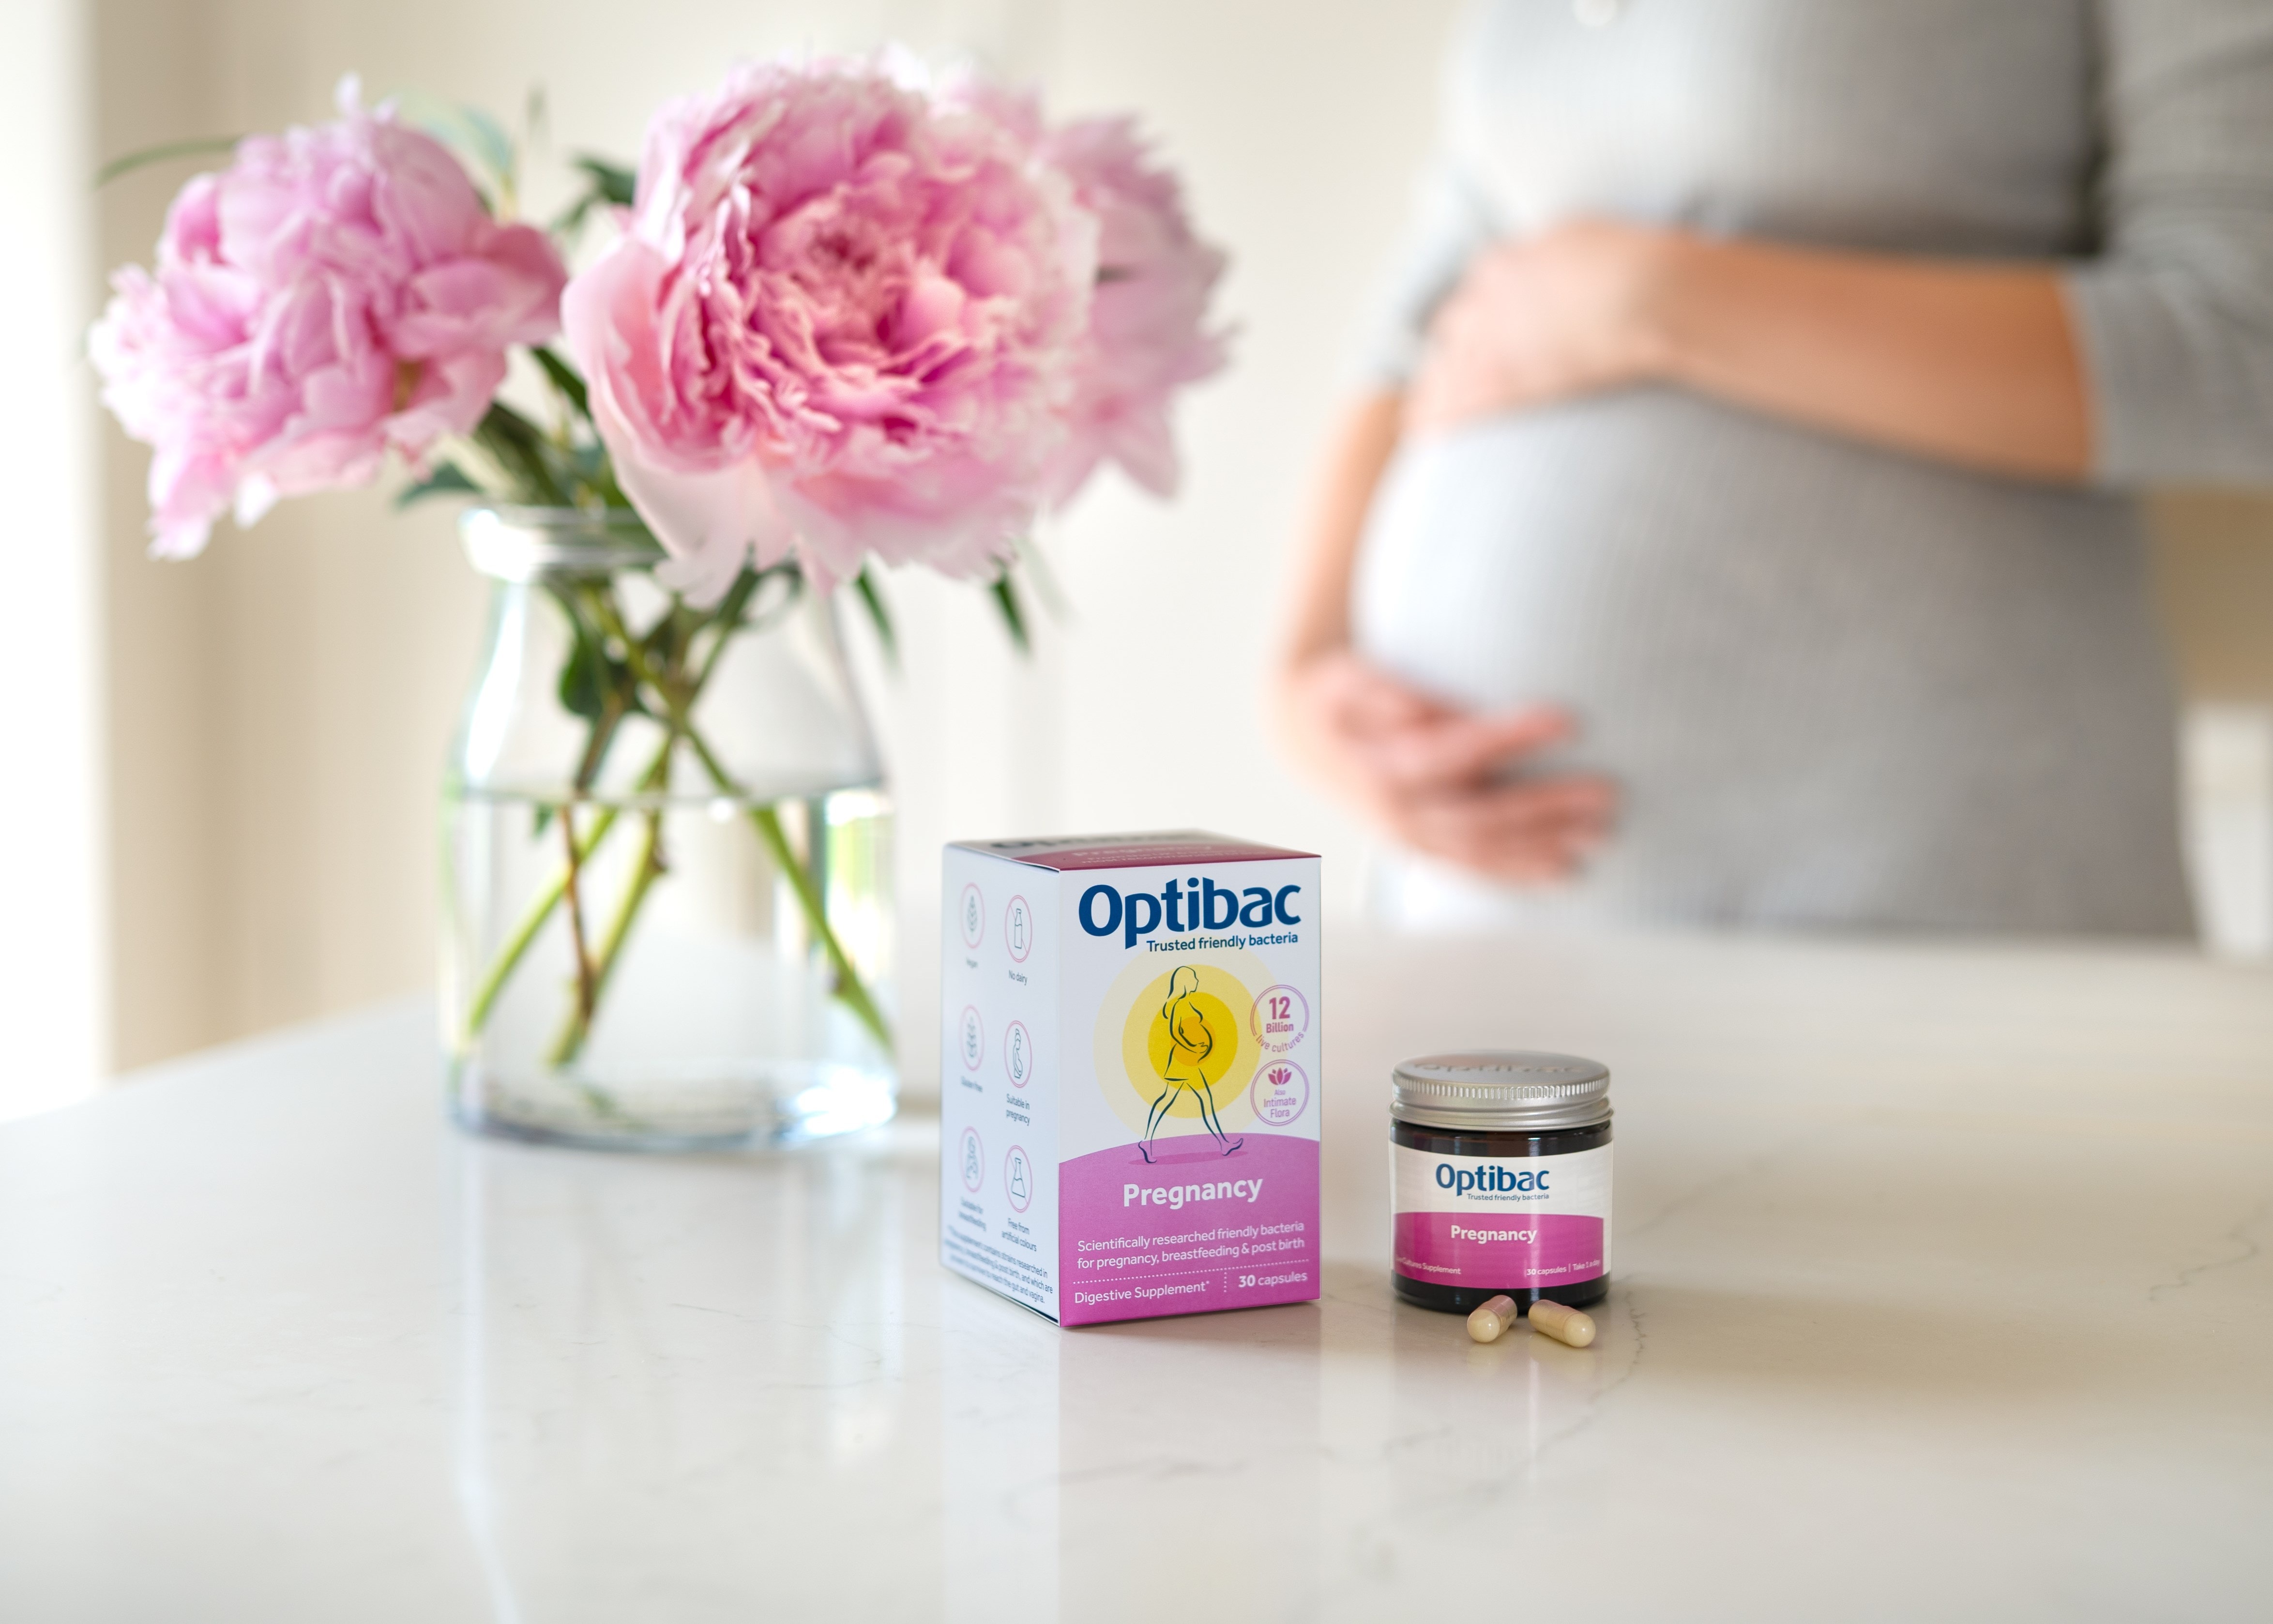 Optibac for pregnancy lifestyle shot